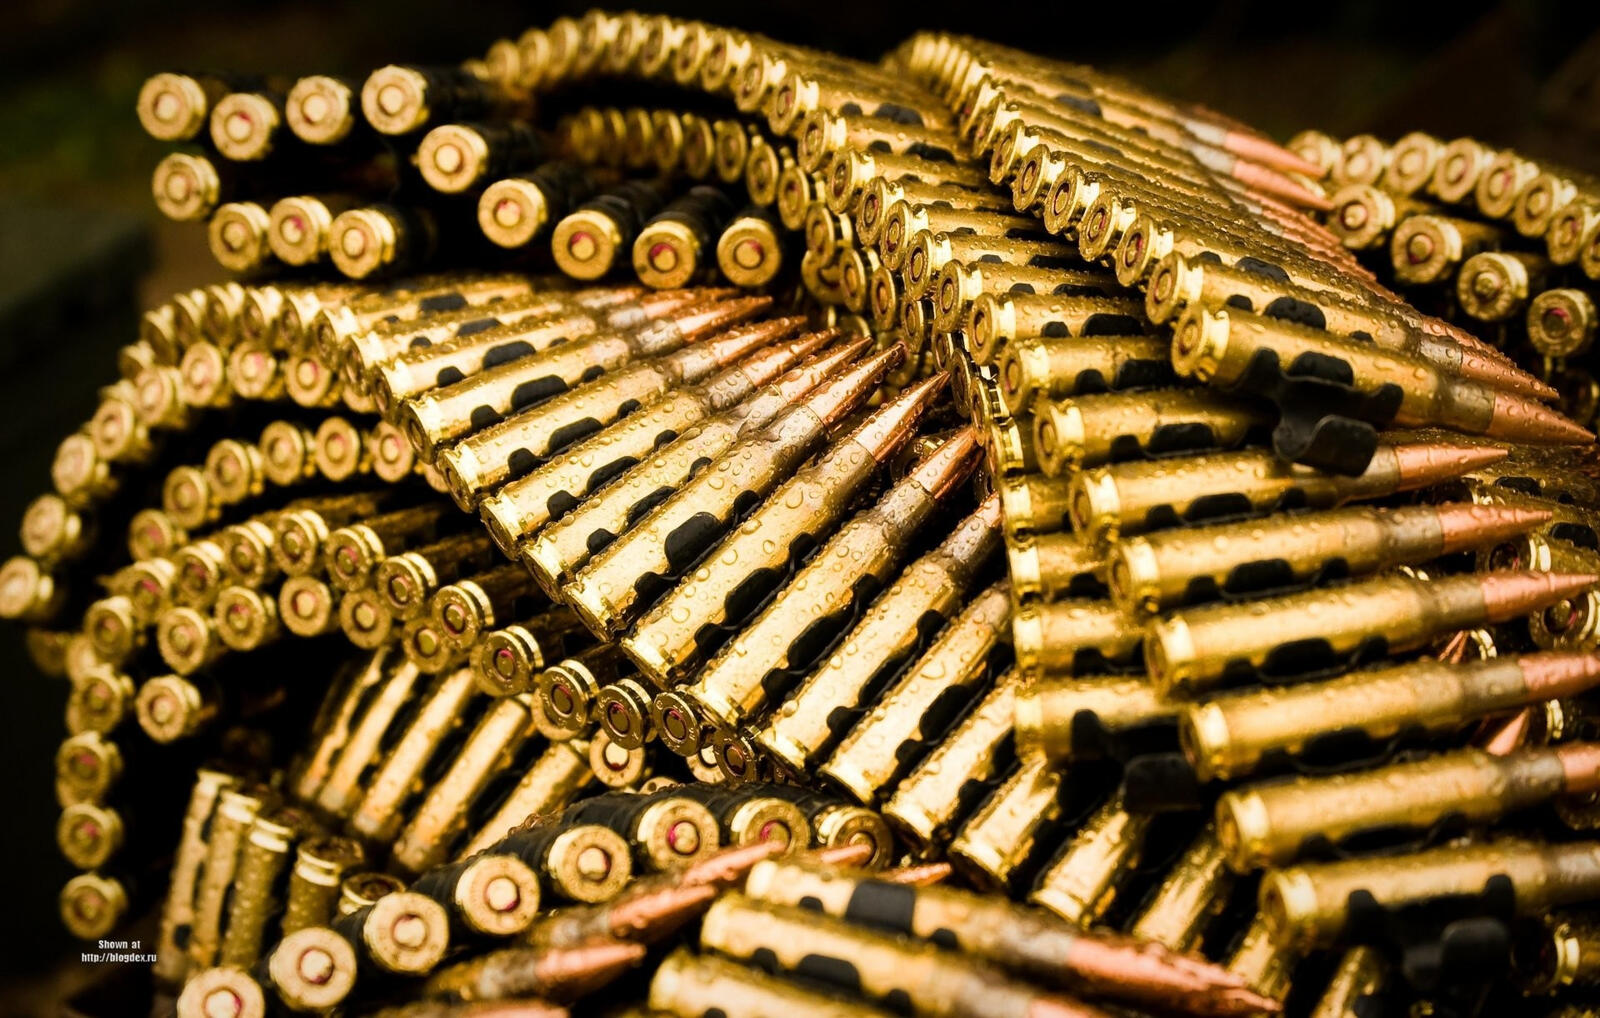 Бесплатное фото Пулеметная лента с патронами